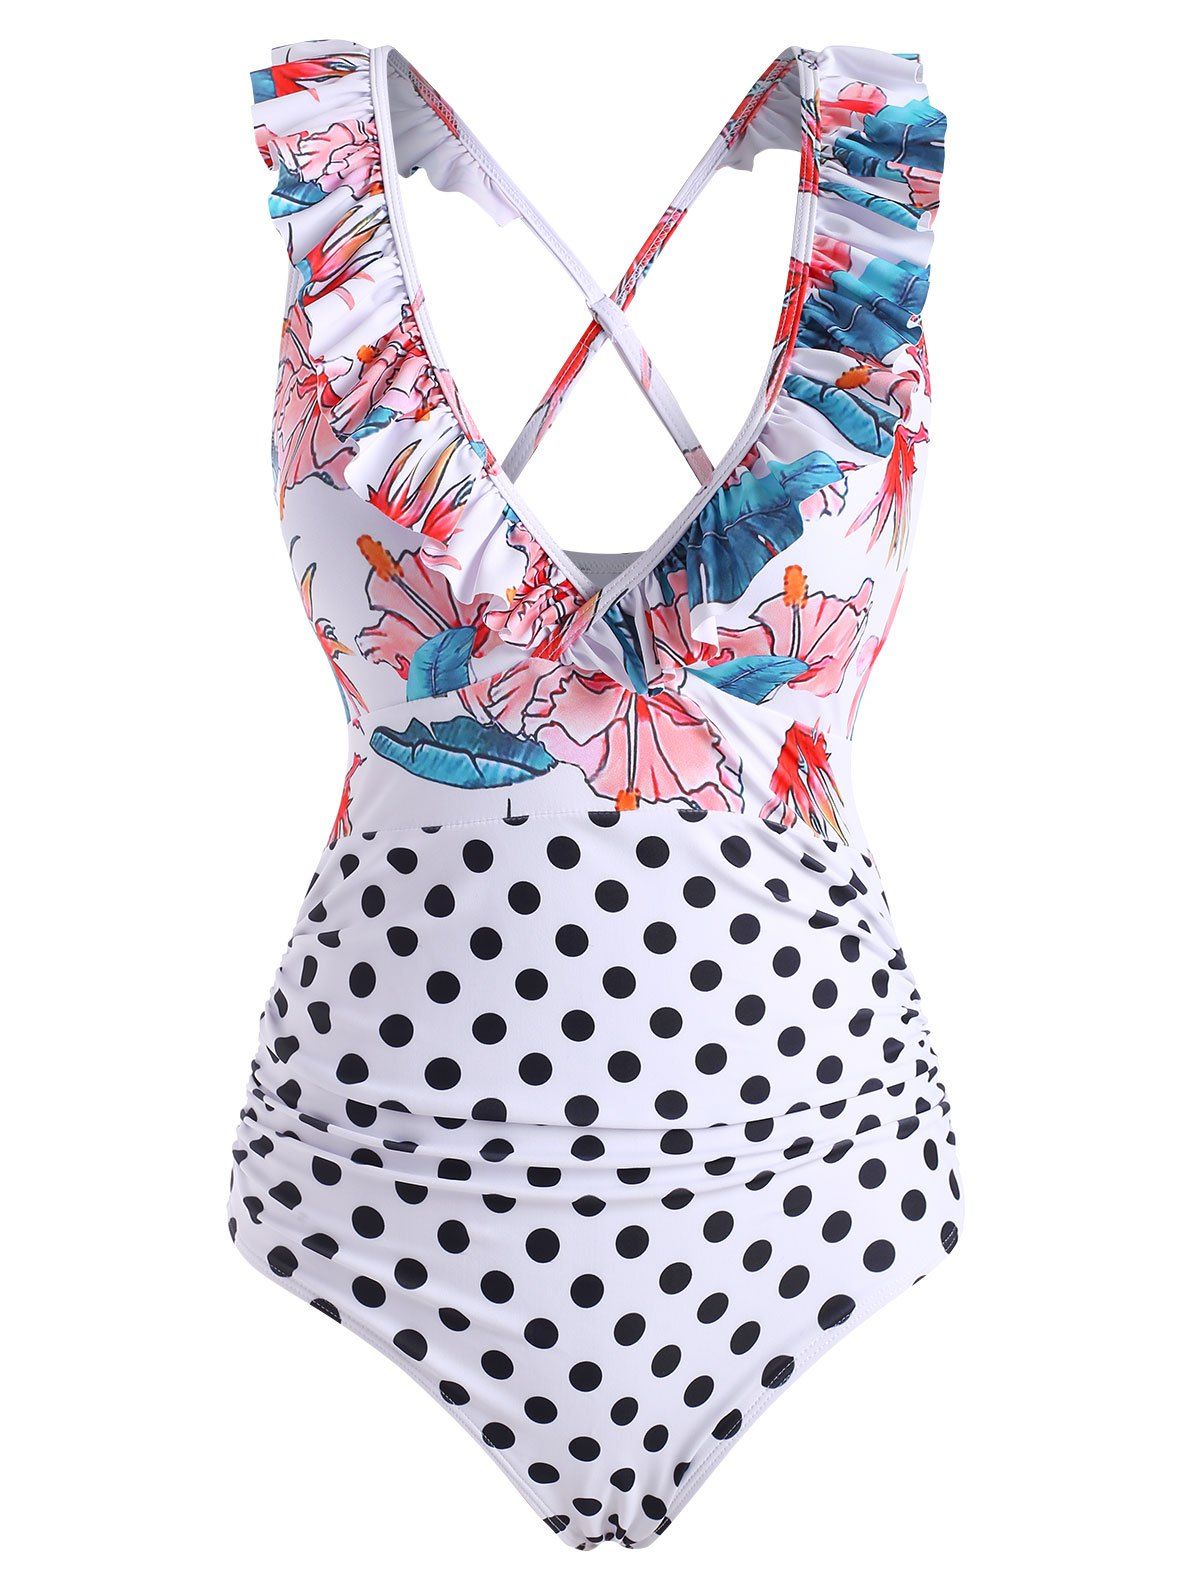 Ruffle Polka Dot Flower Criss Cross One-piece Swimsuit - multicolor L